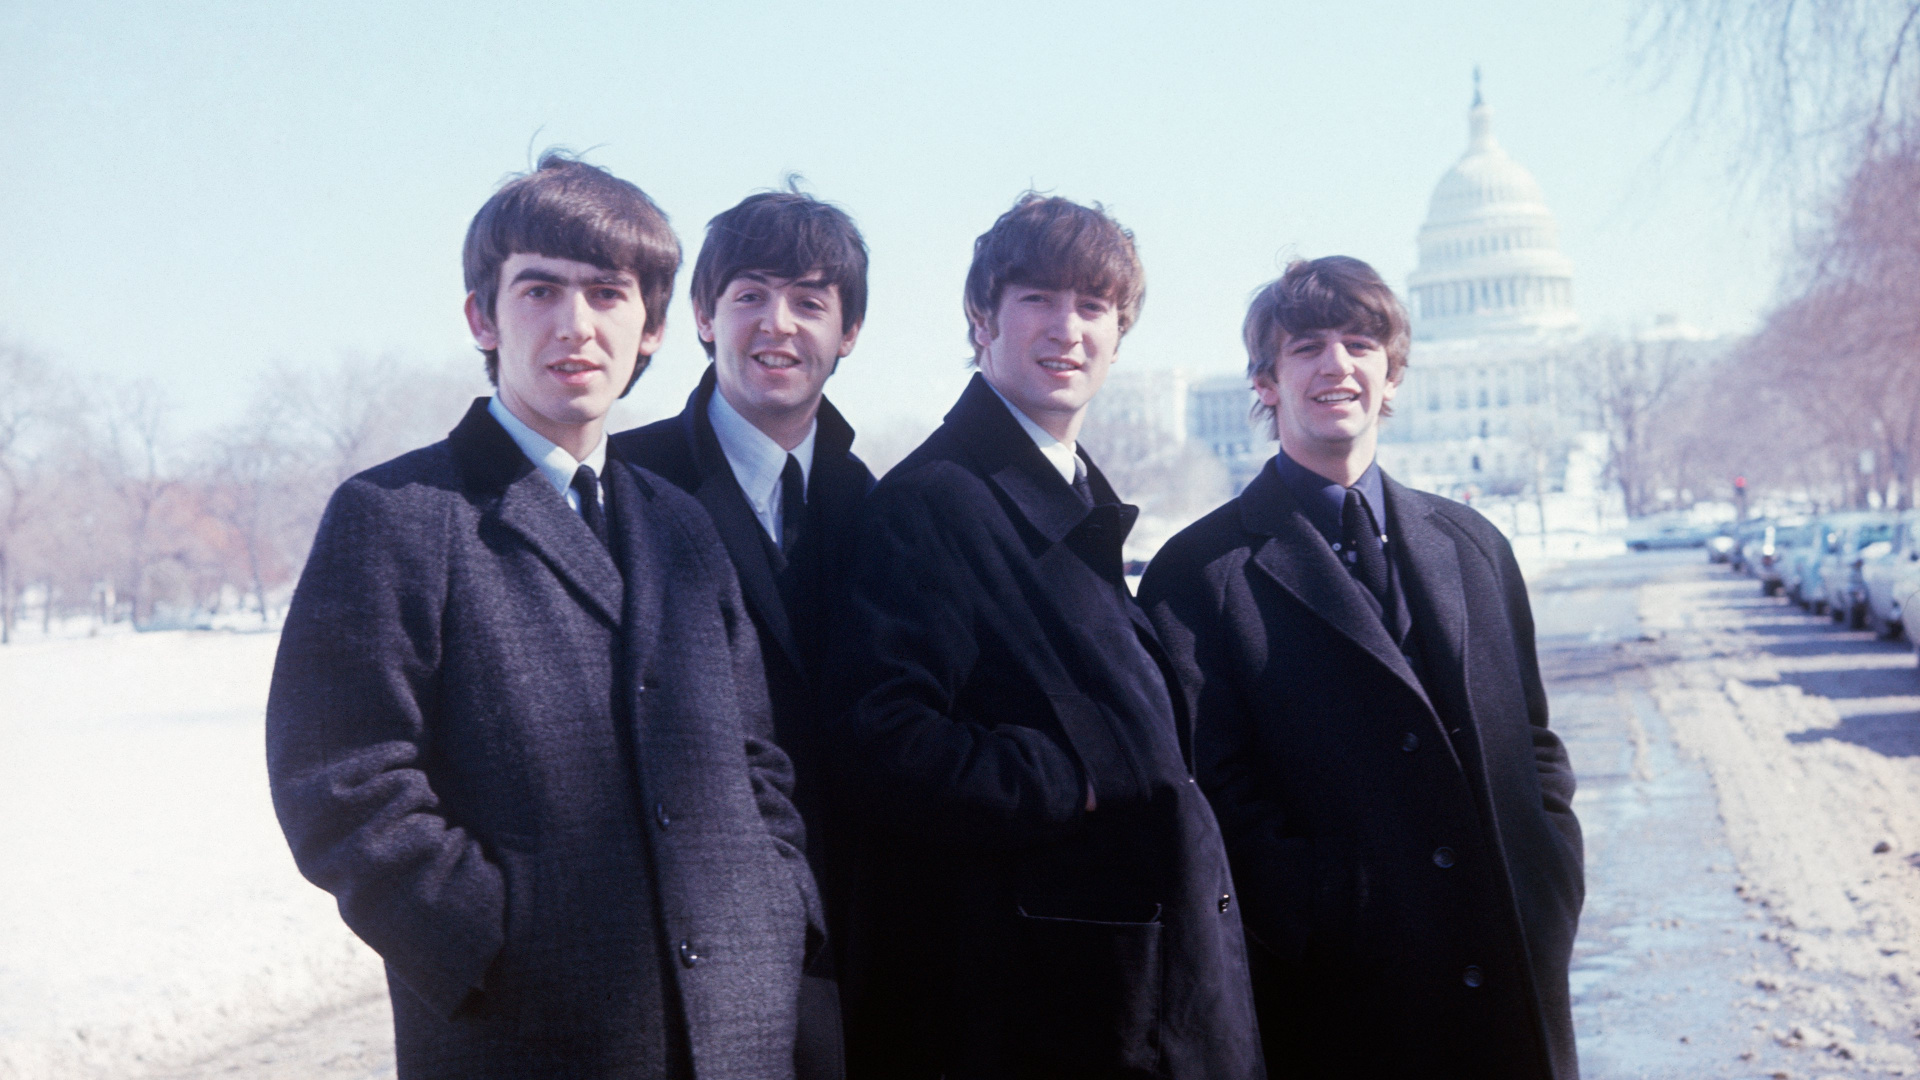 Paul McCartney, Ringo Starr, The Beatles, Social Group, Suit. Wallpaper in 1920x1080 Resolution